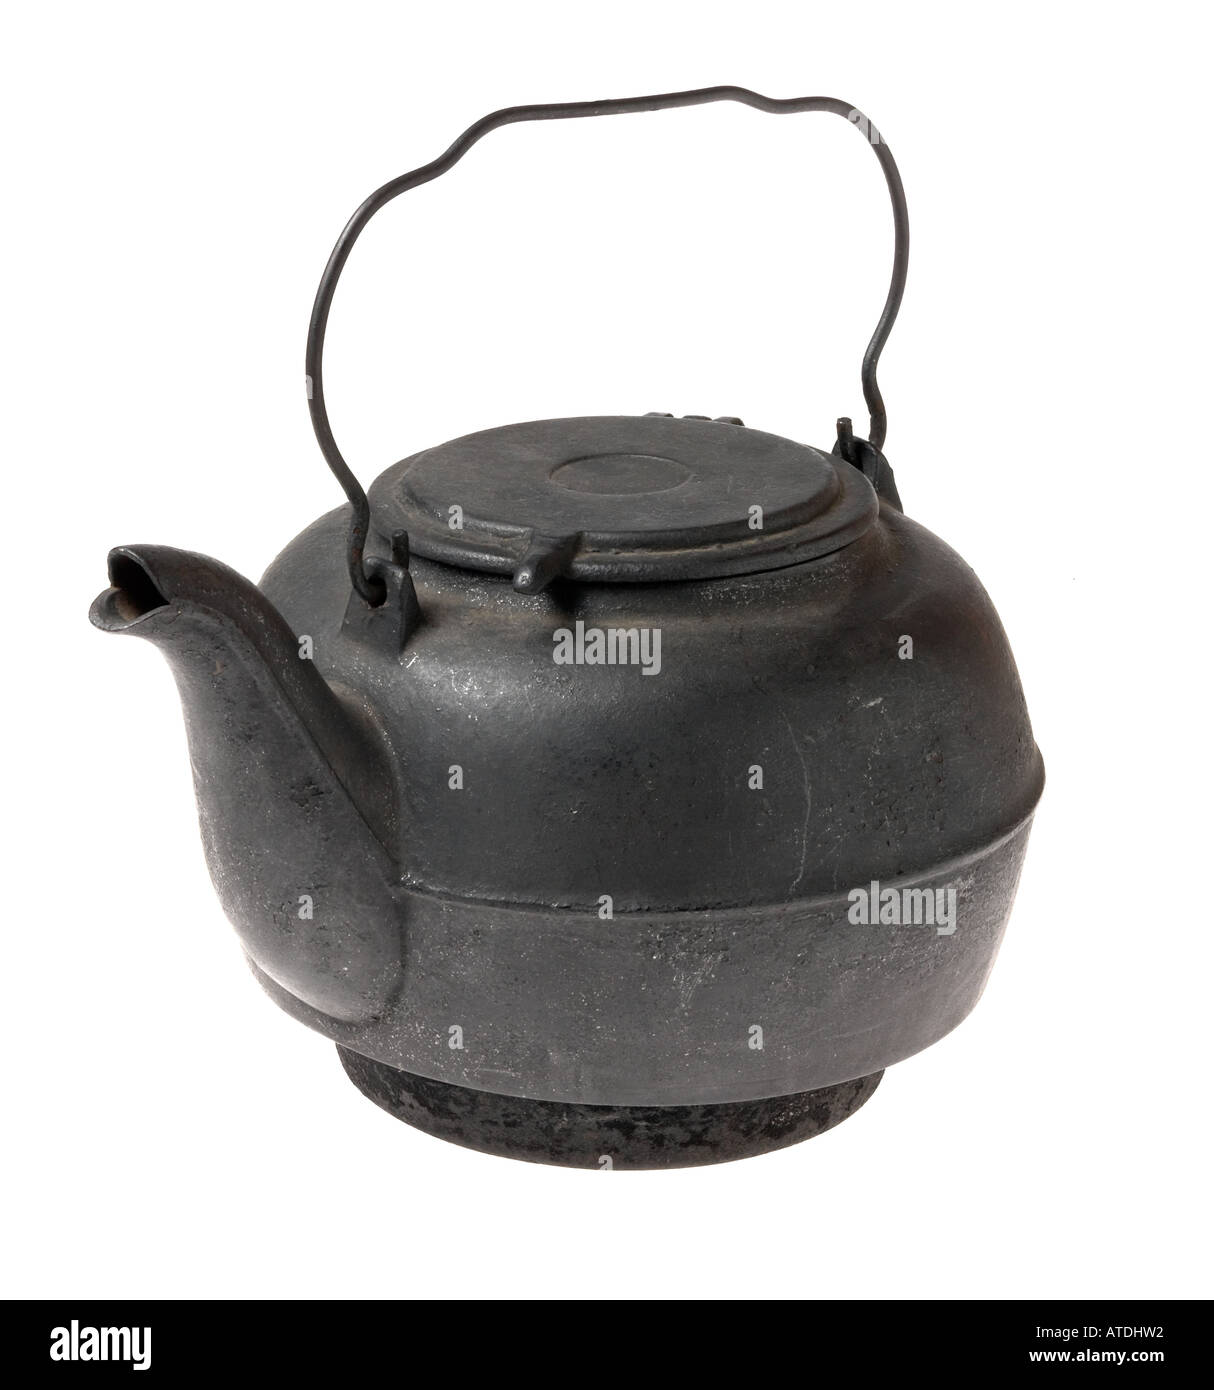 https://c8.alamy.com/comp/ATDHW2/antique-cast-iron-teapot-ATDHW2.jpg